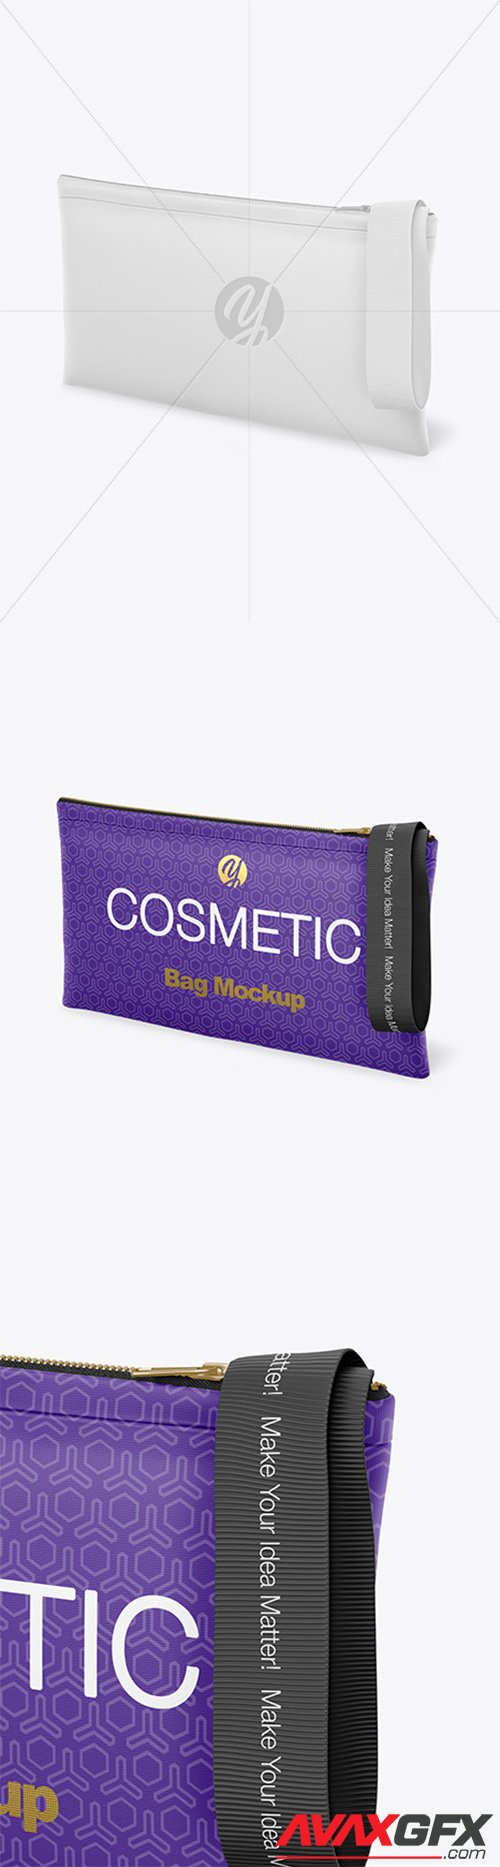 Cosmetic Bag Mockup 65371